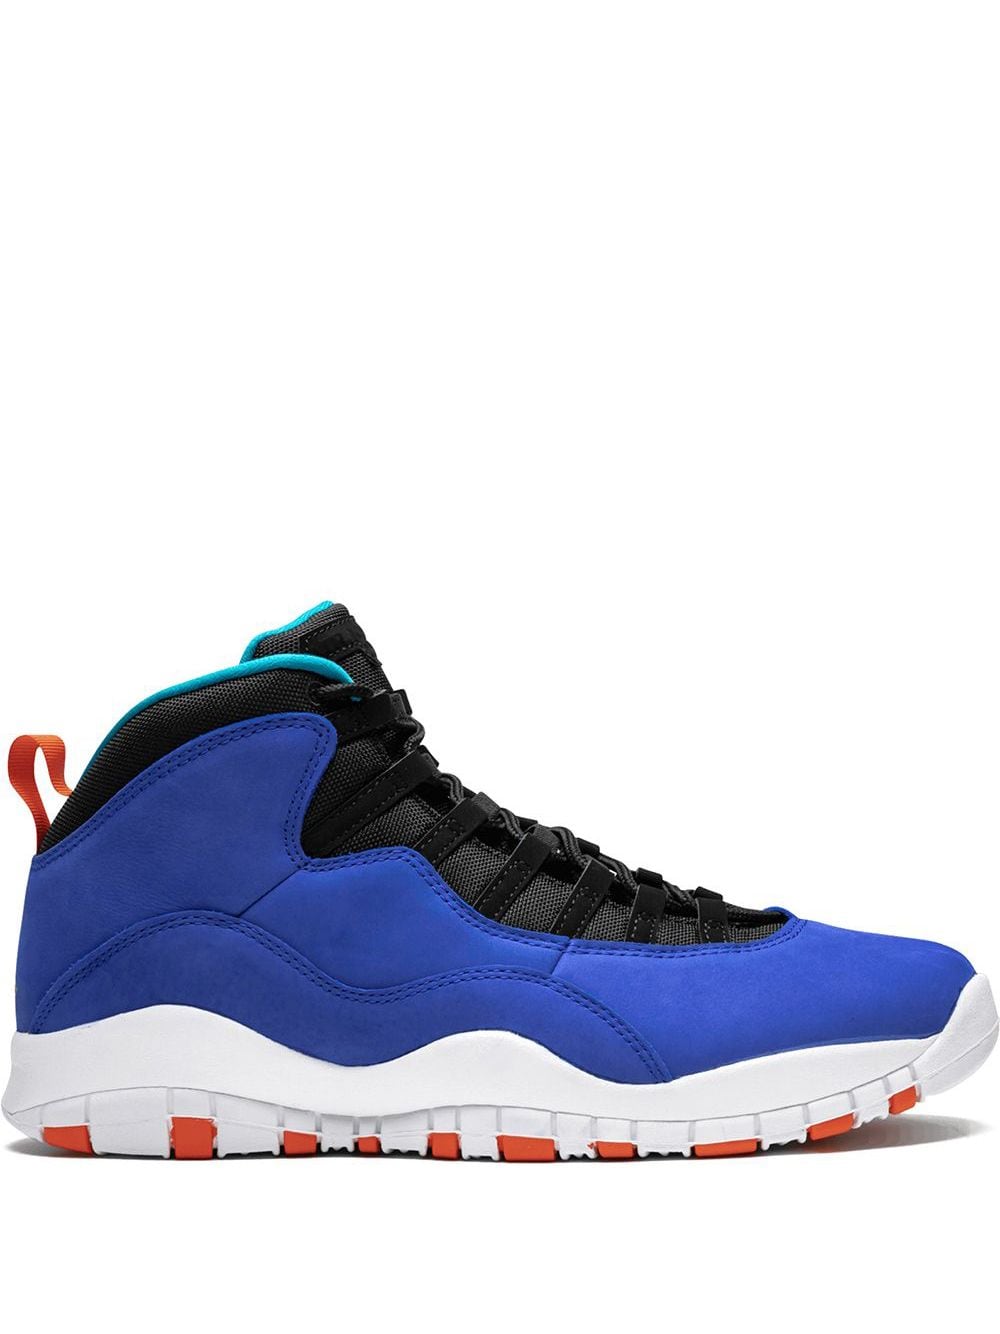 Jordan Air Jordan 10 Retro "Tinker" sneakers - Blue